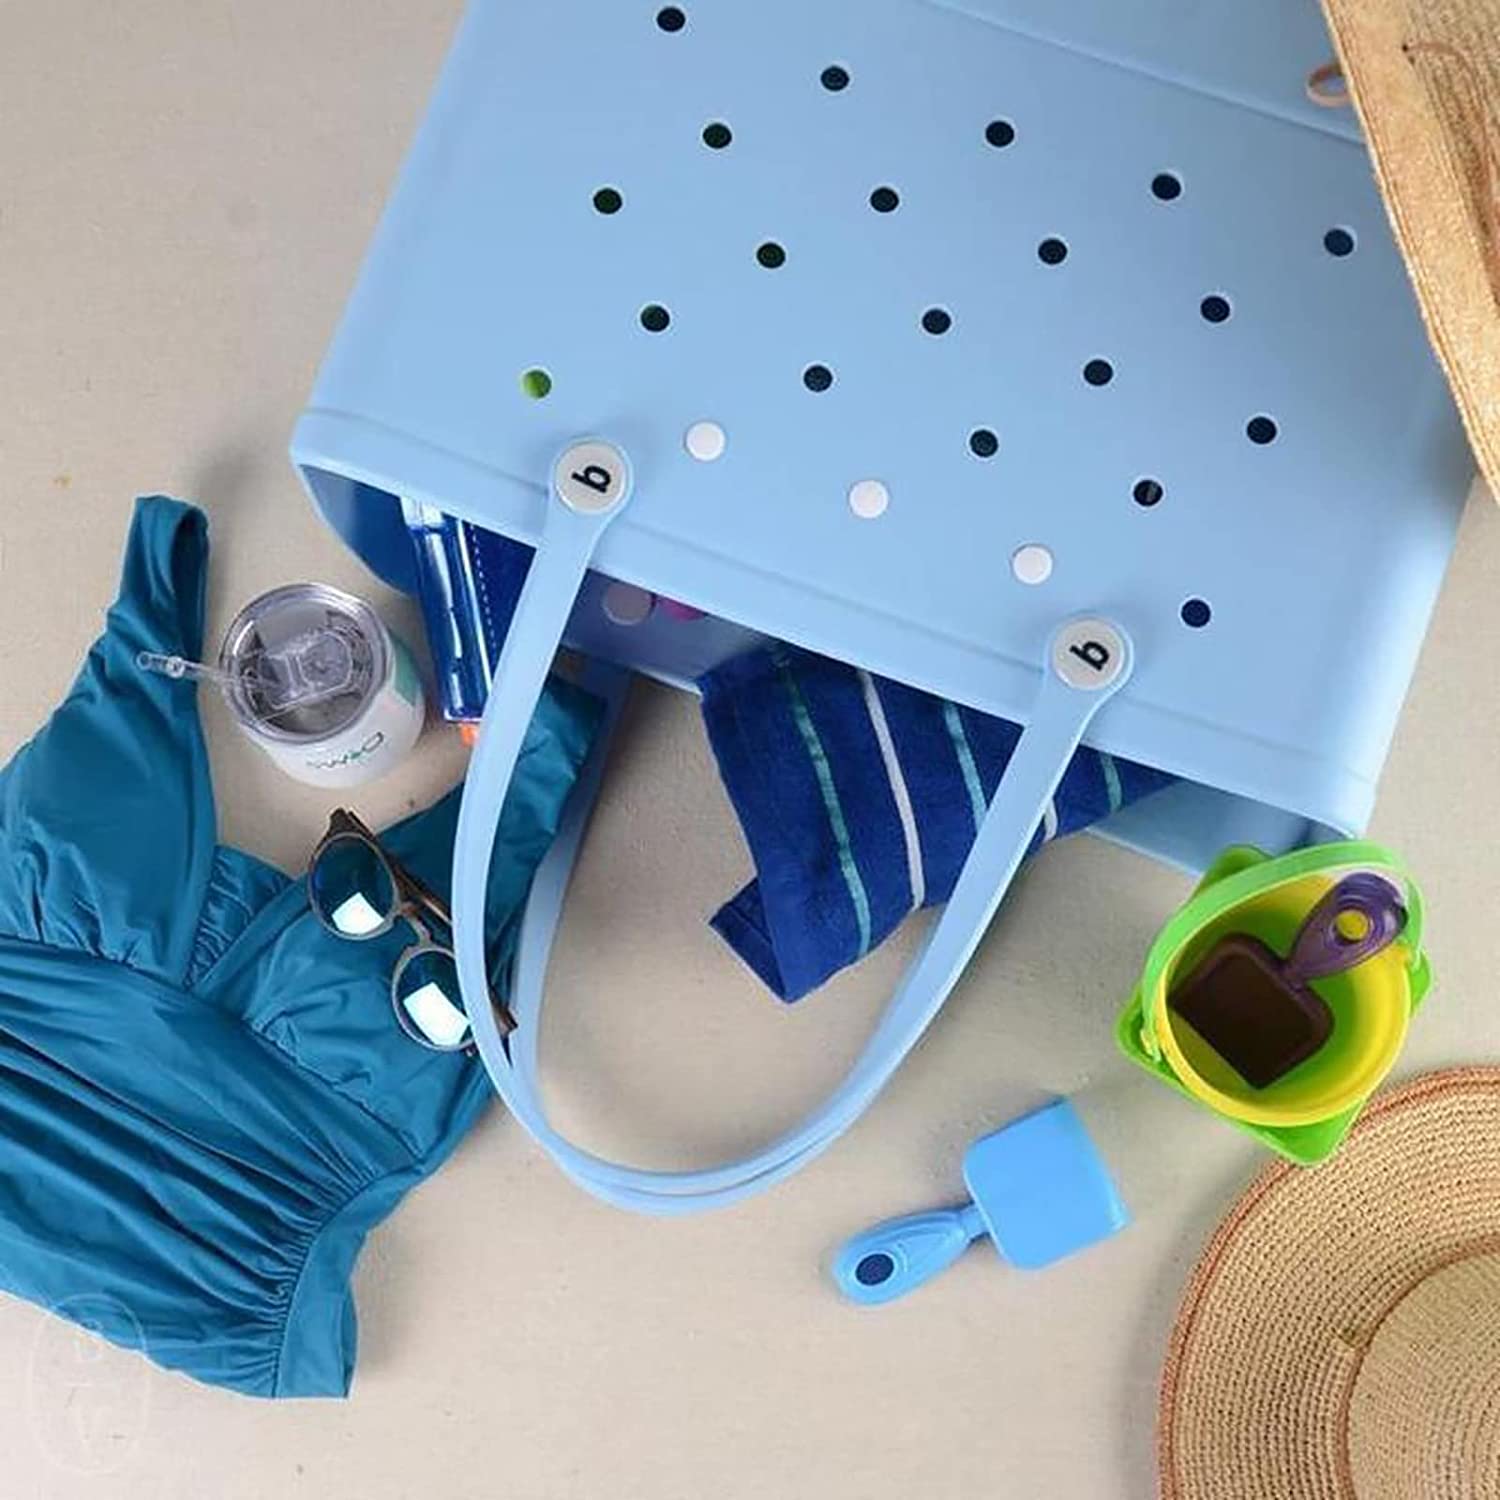 Designer Eva Bogg Bag For Women Luxury Beach Tote With Waterproof